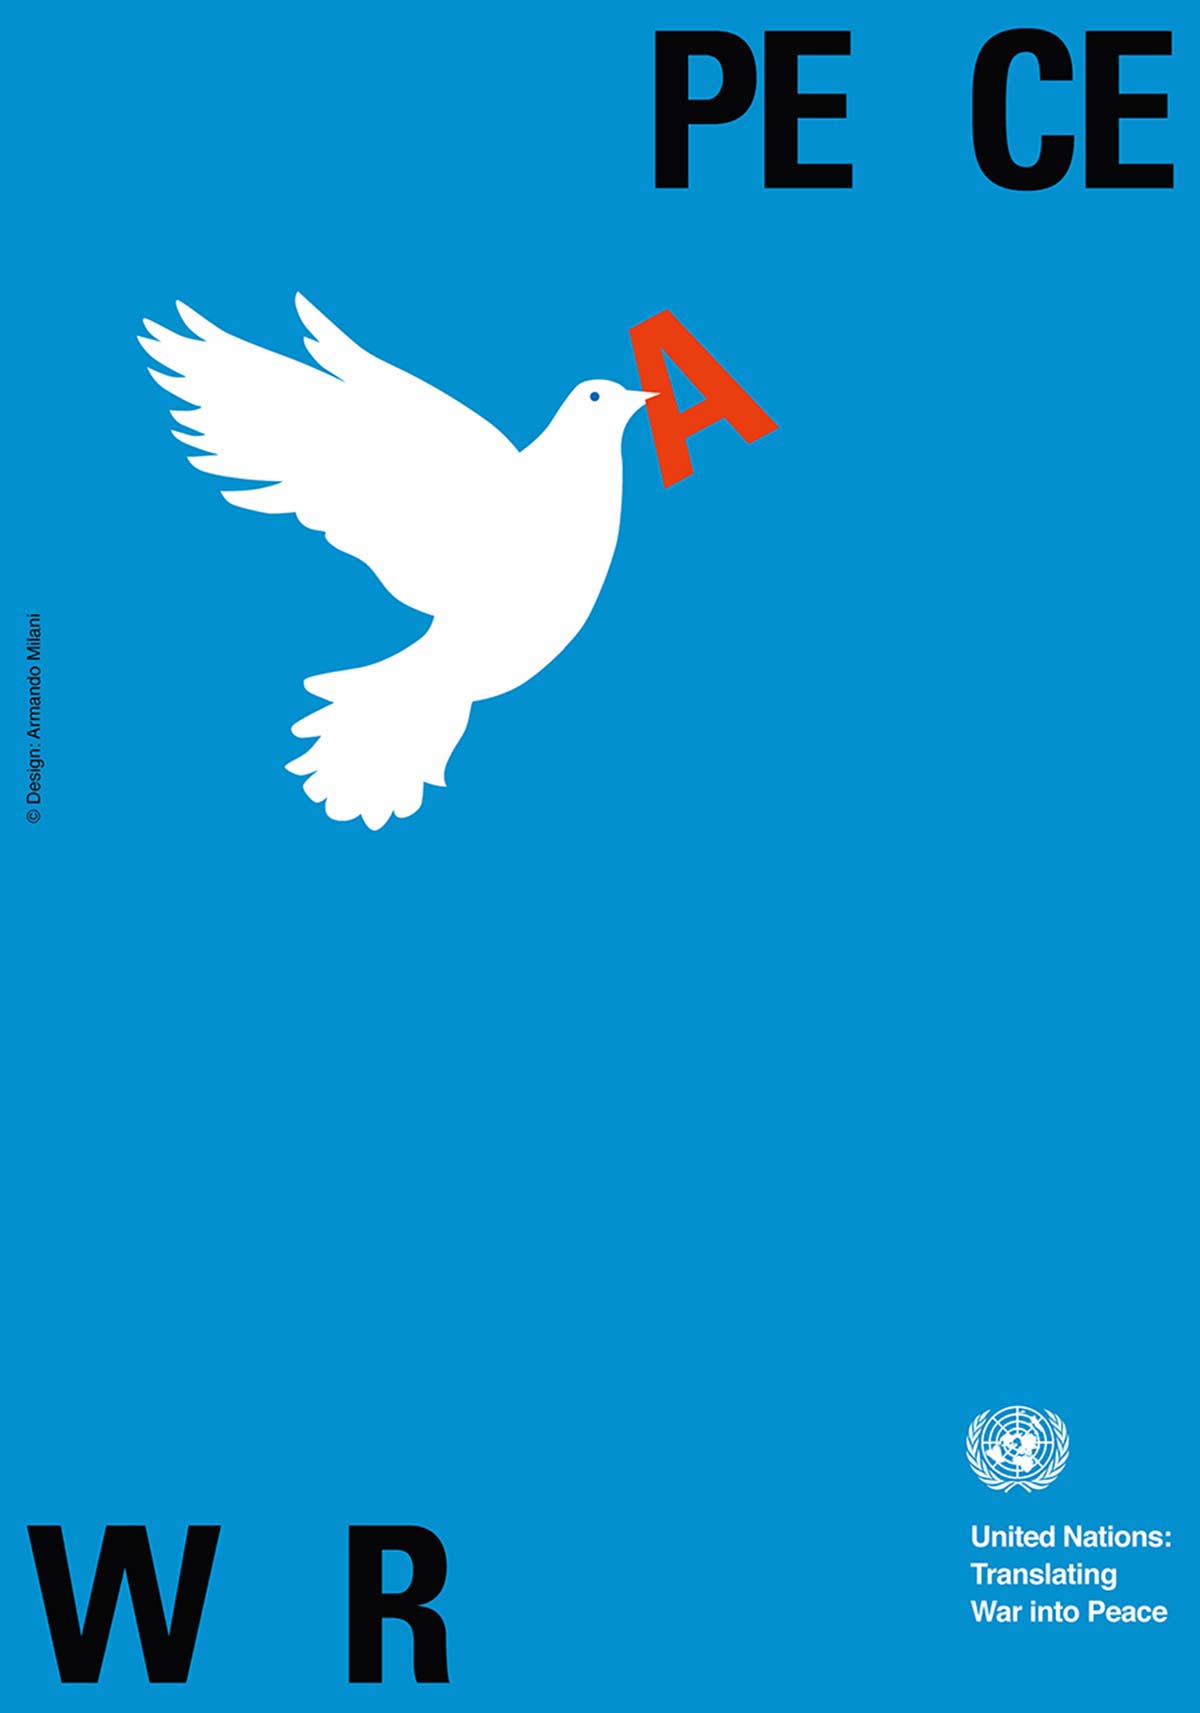 Translating War into Peace poster by Armando Milani, 2003